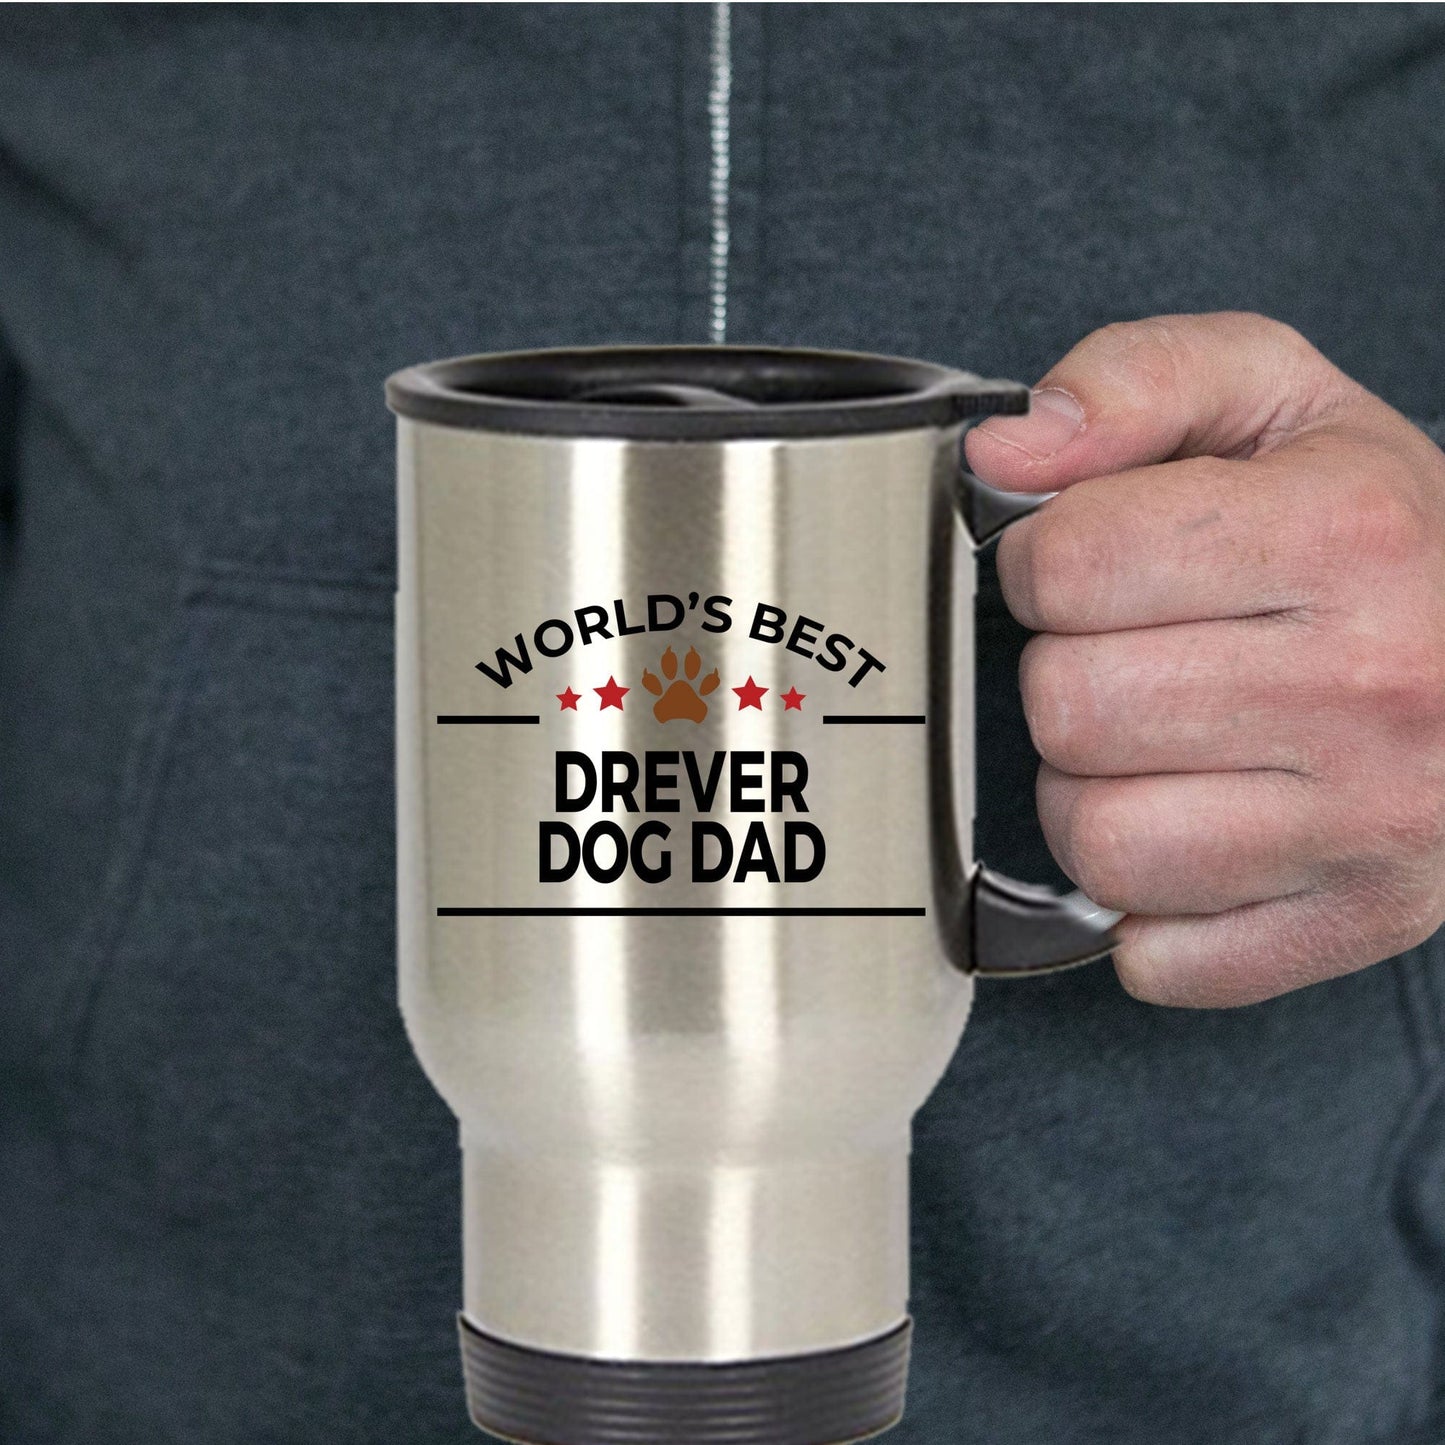 Drever Dog Dad Travel Coffee Mug